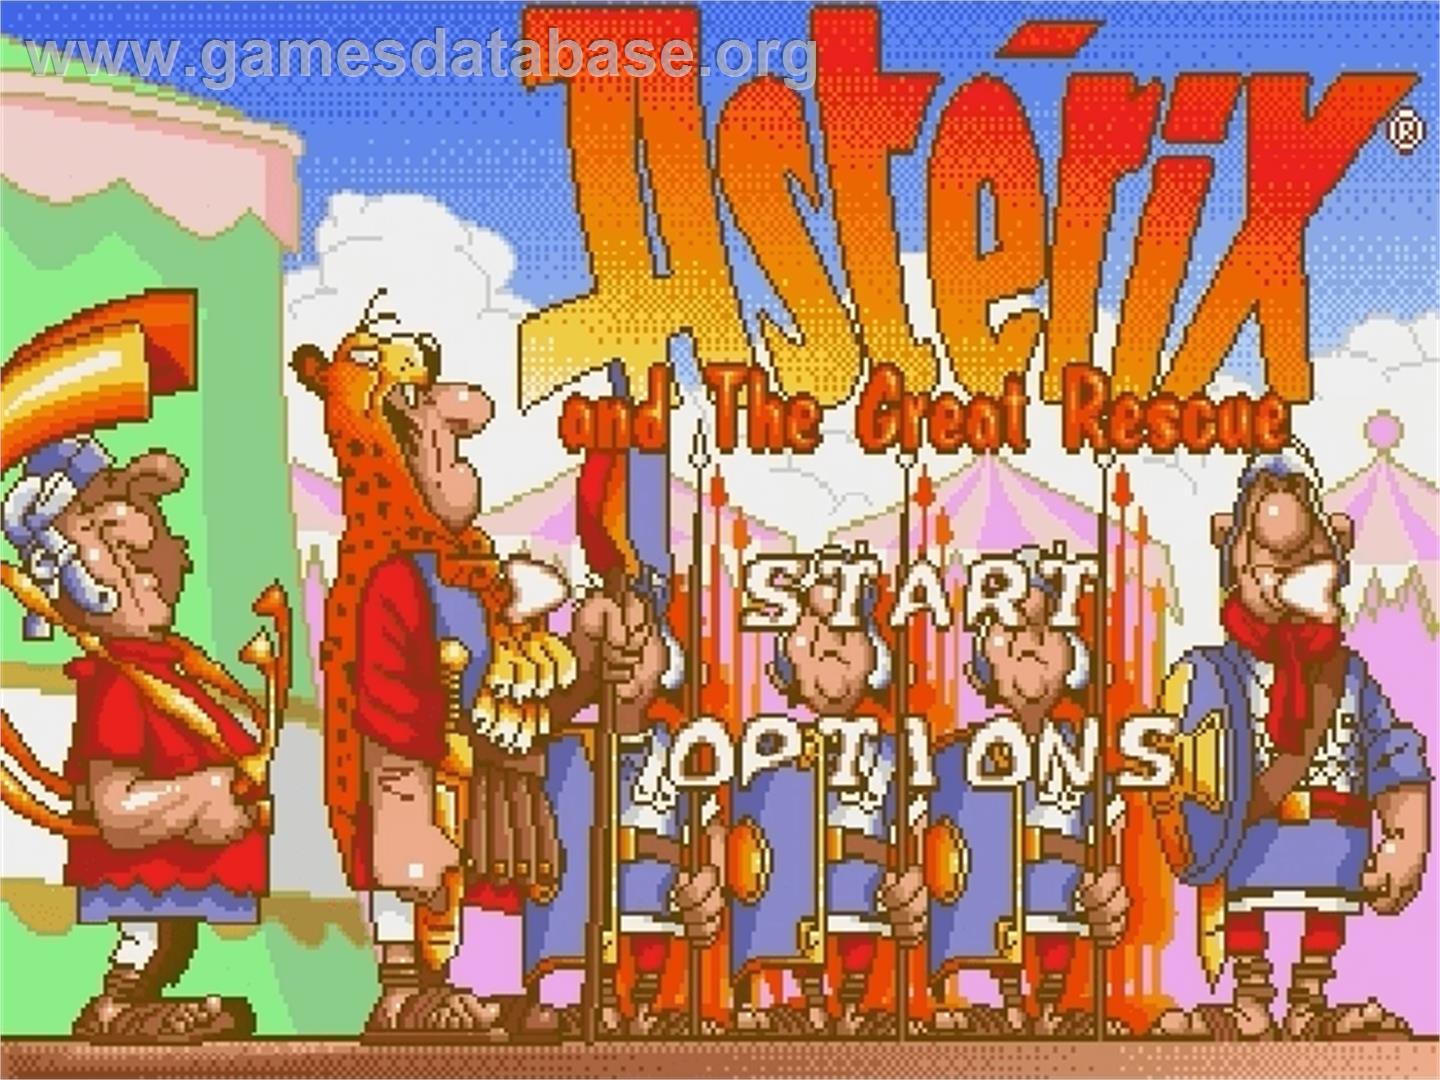 Astérix and the Great Rescue - Sega Genesis - Artwork - Title Screen